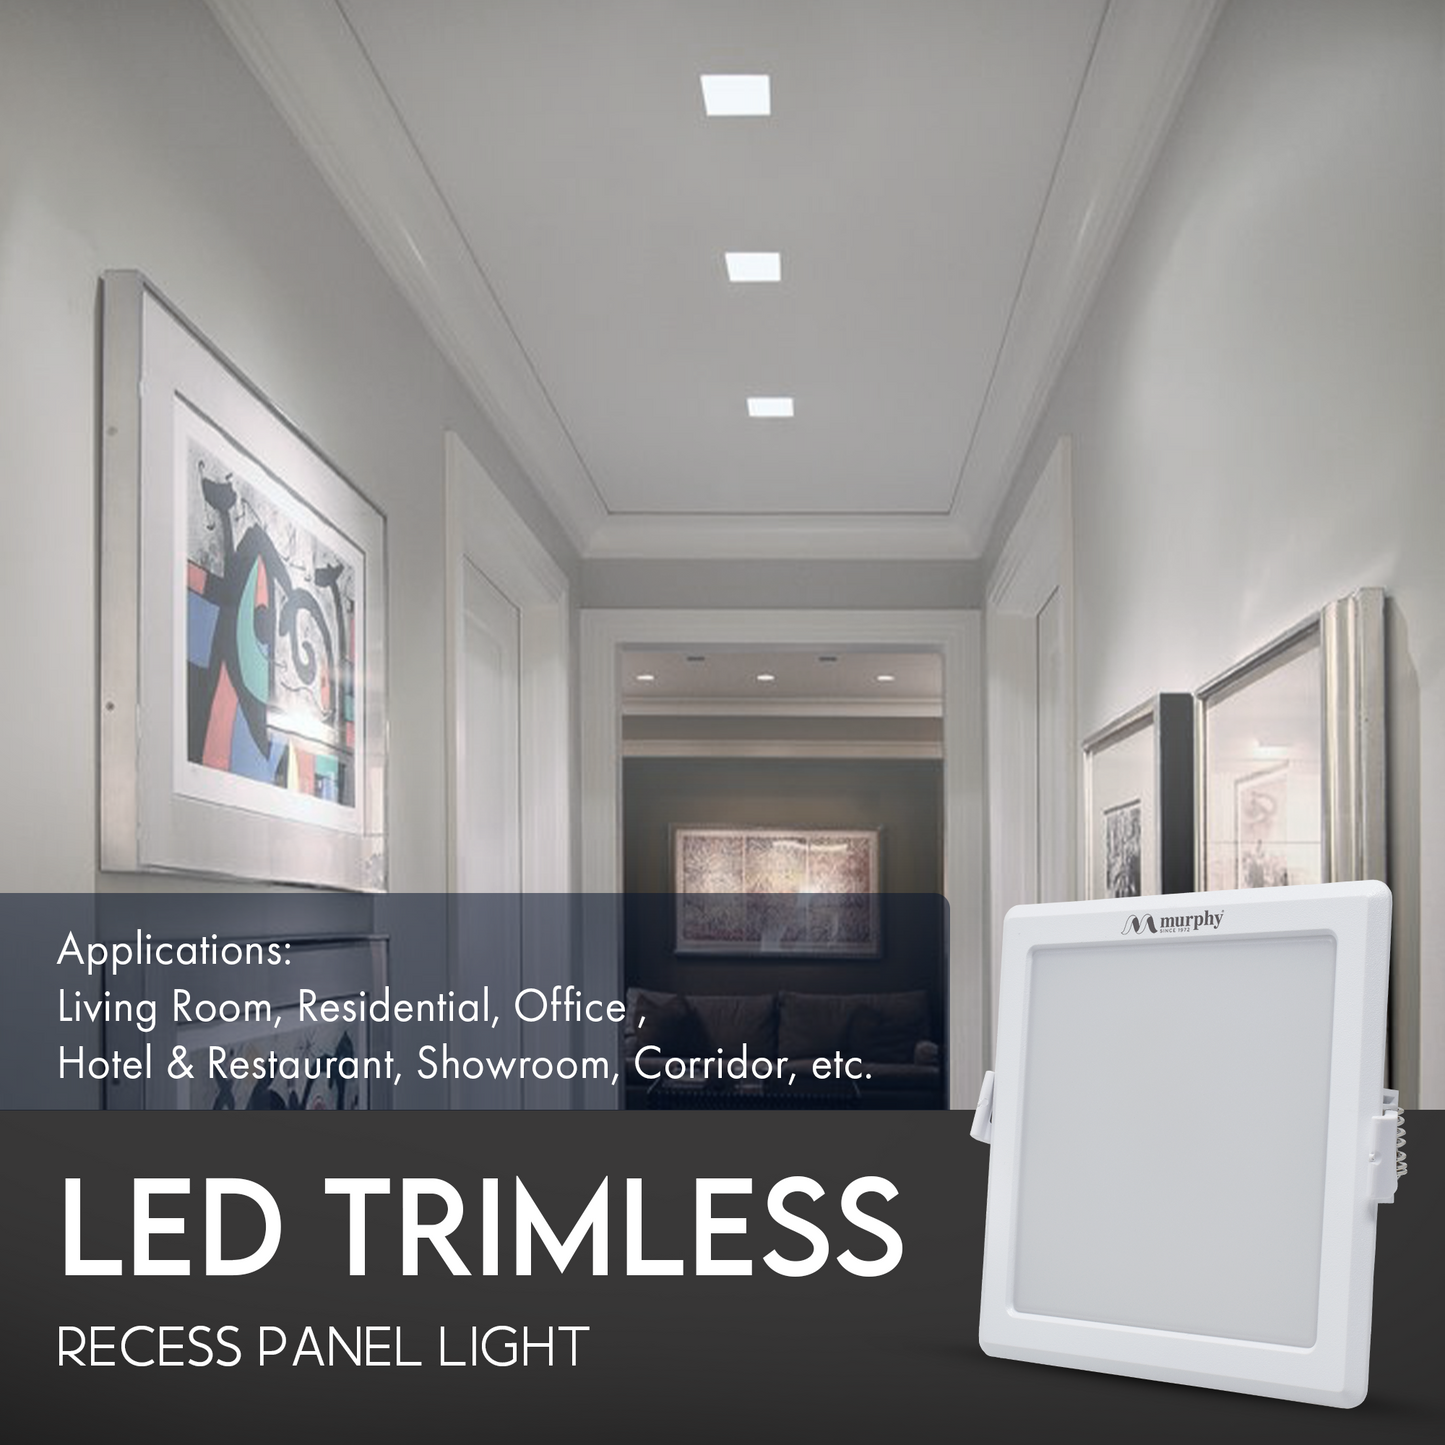 Murphy 10W Trimless Square Recess Panel Light